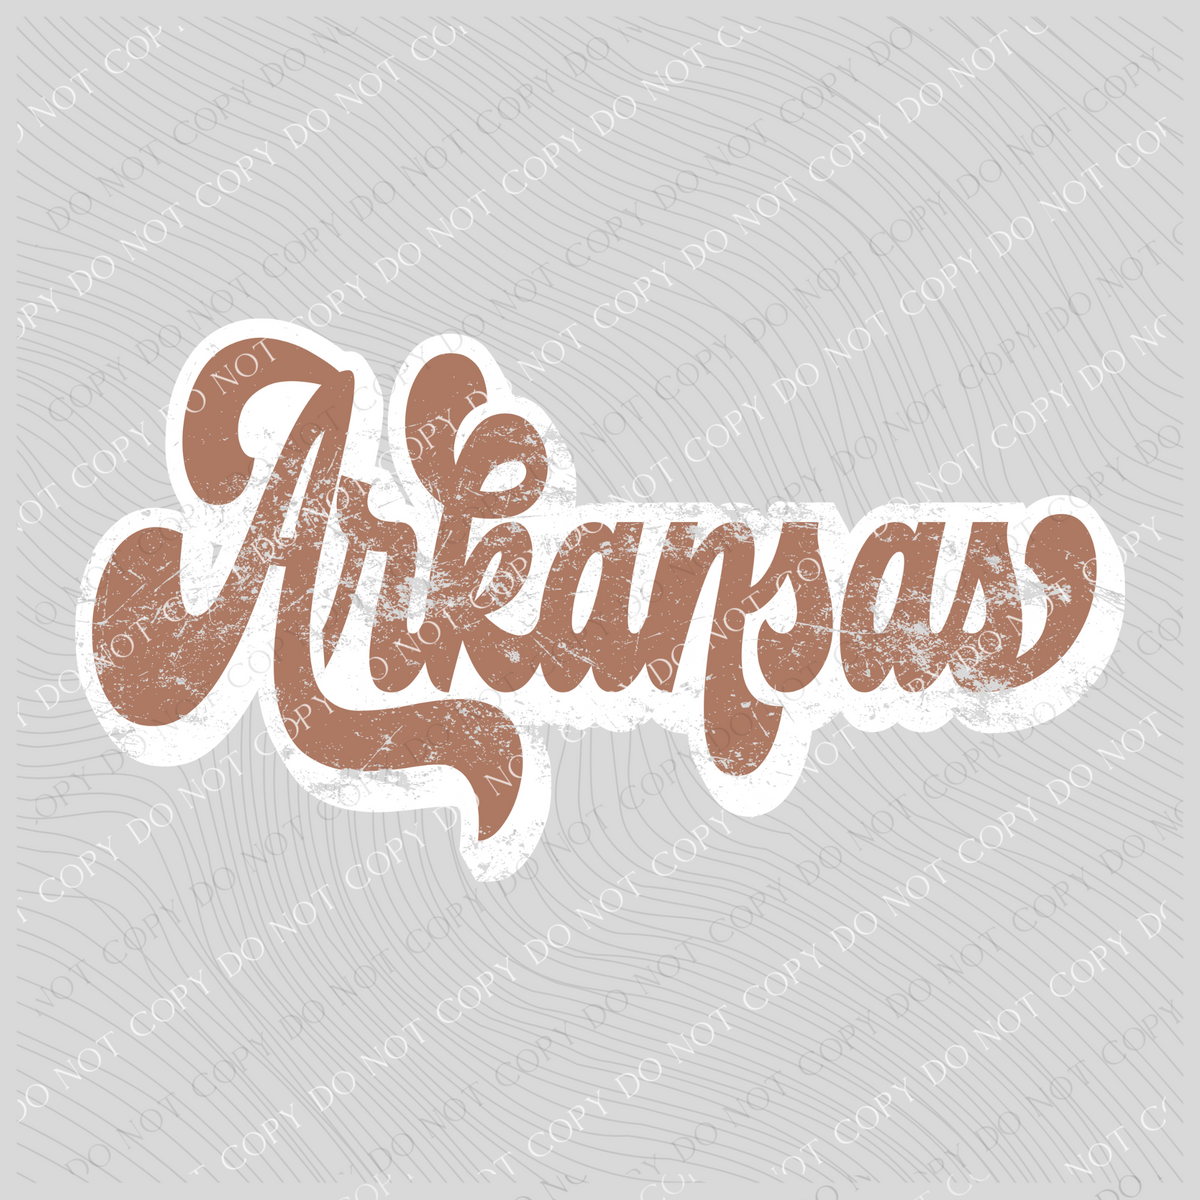 Arkansas Chestnut & White Retro Shadow Distressed Digital Download, PNG